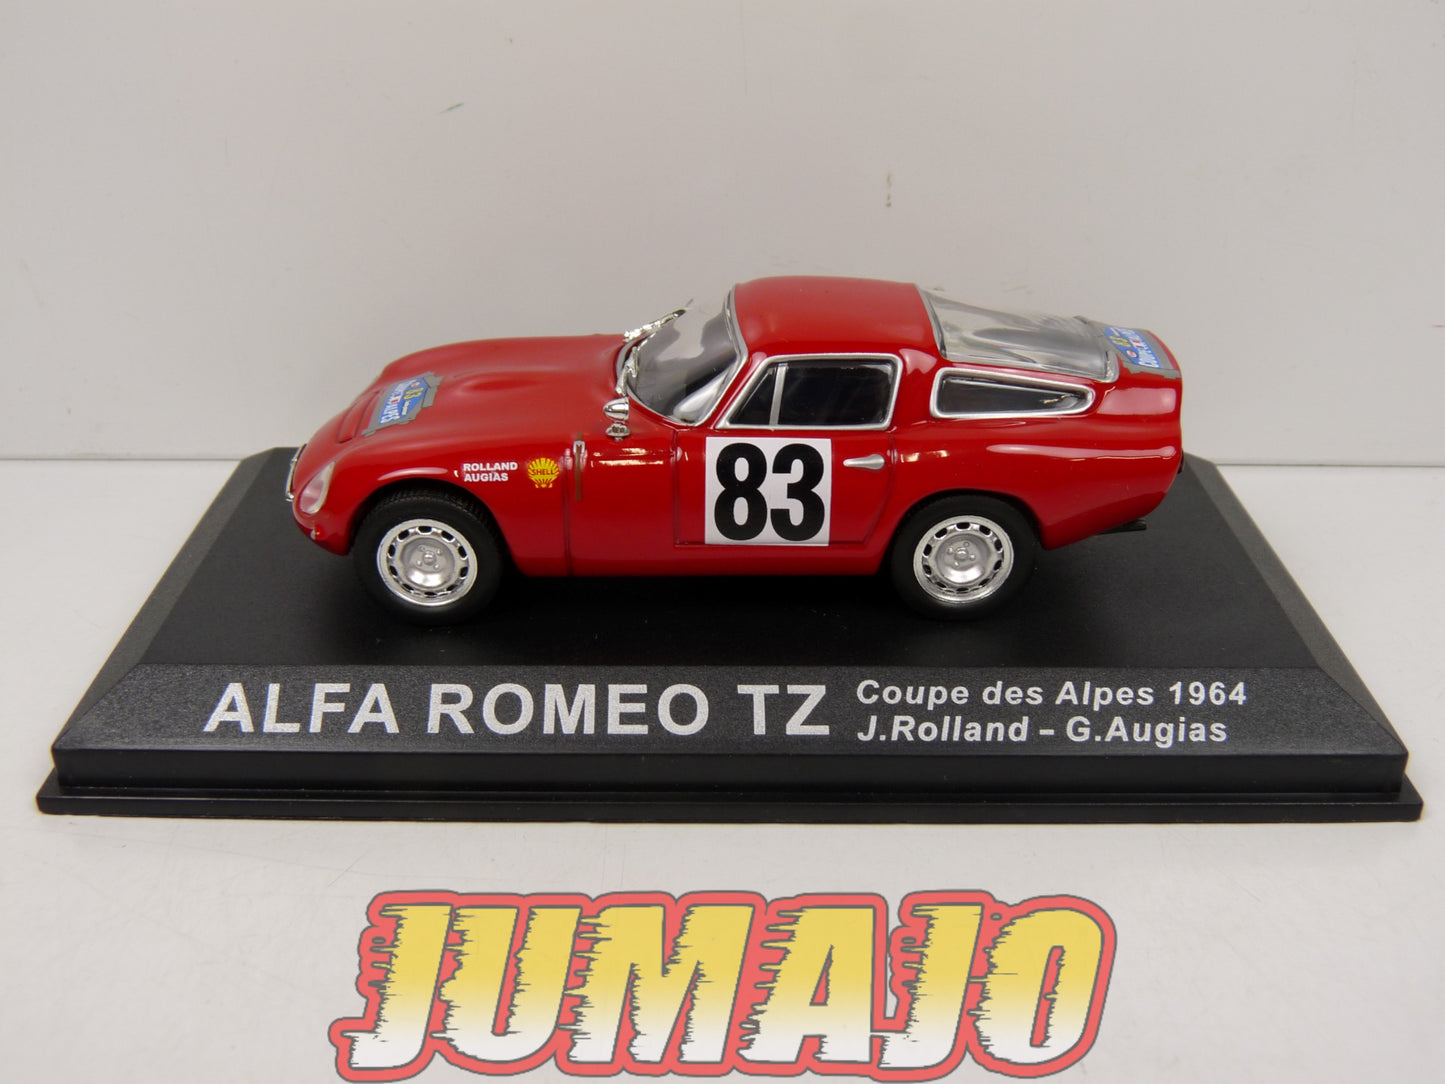 RLY45 voiture 1/43 IXO Altaya Rallye : ALFA ROMEO #83 1964 J.Rolland